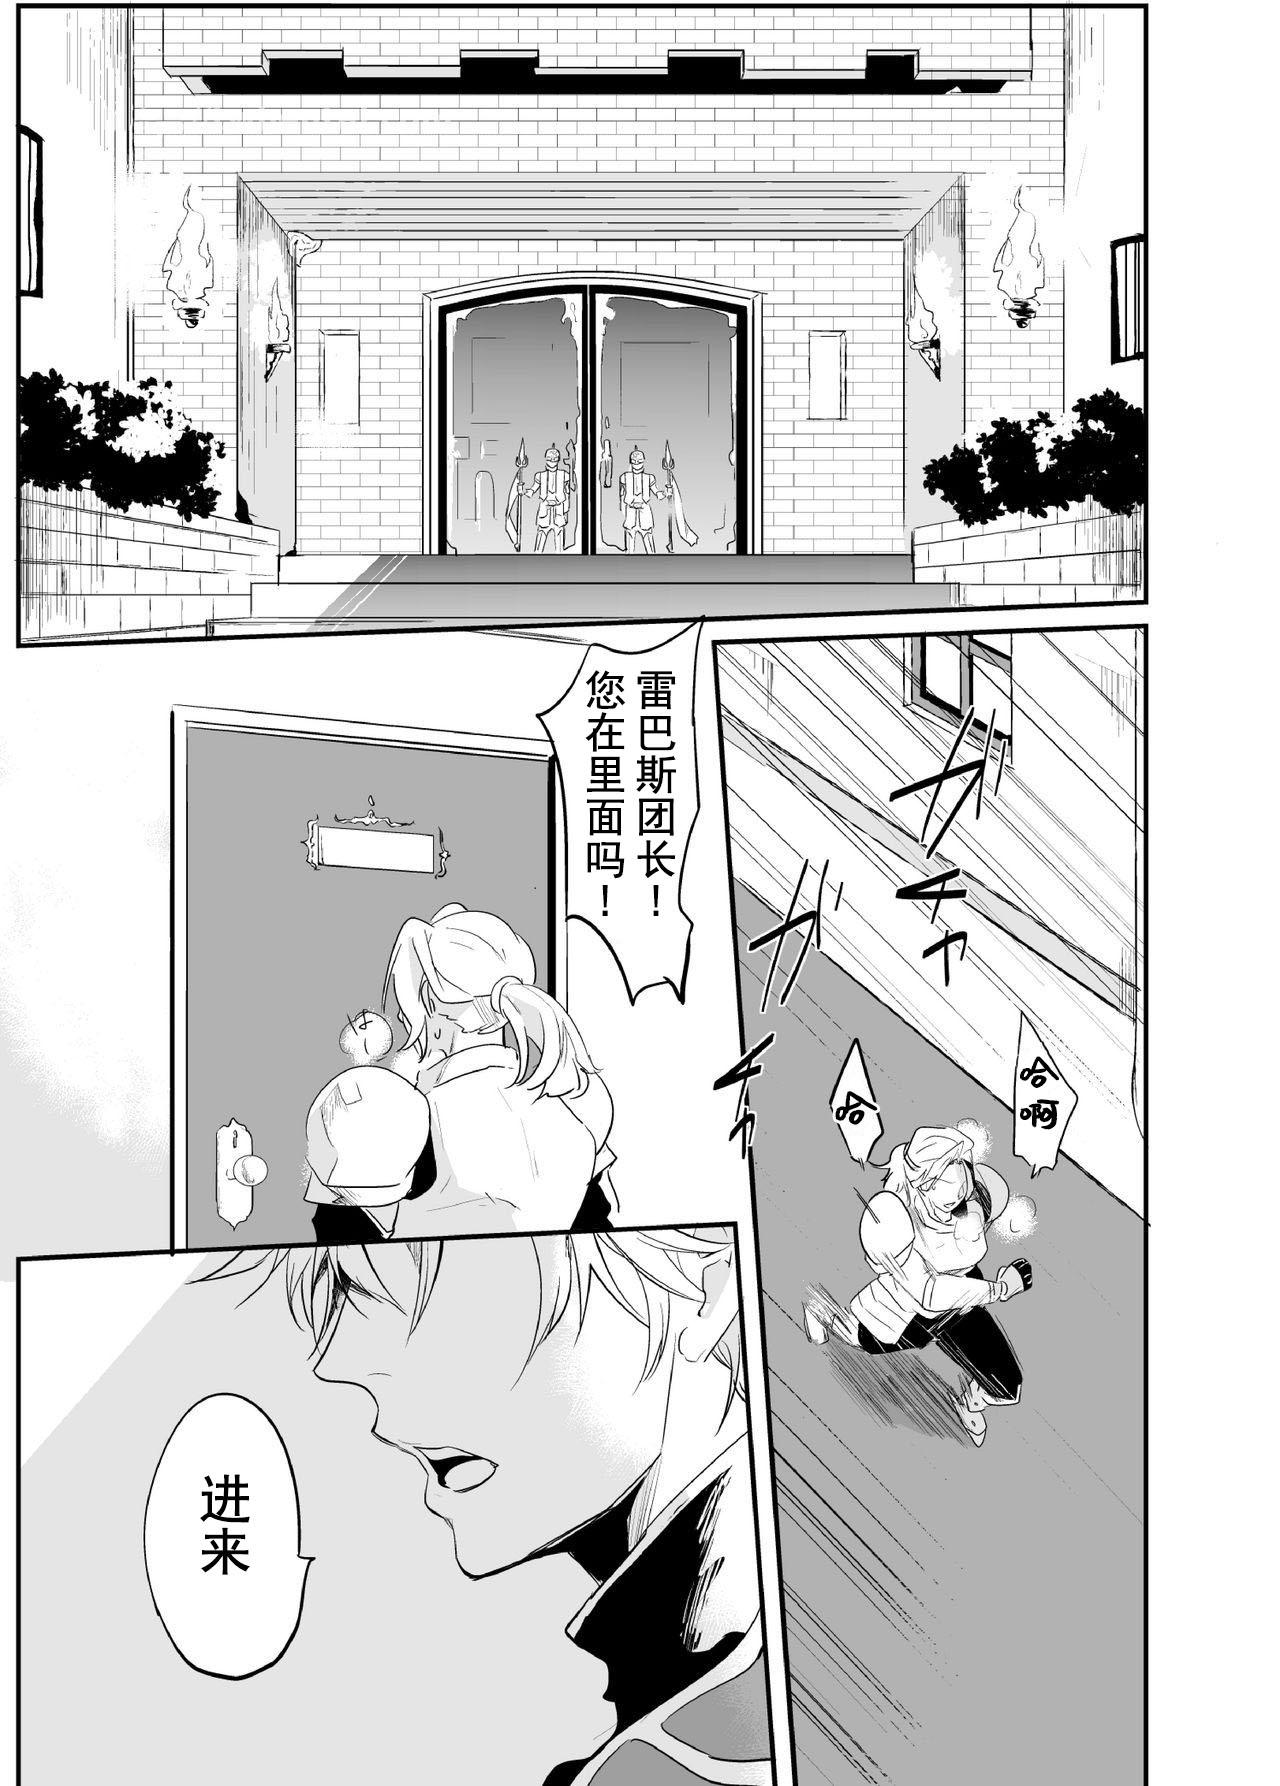 Adorable Ochita ri sei - Original Emo - Page 2